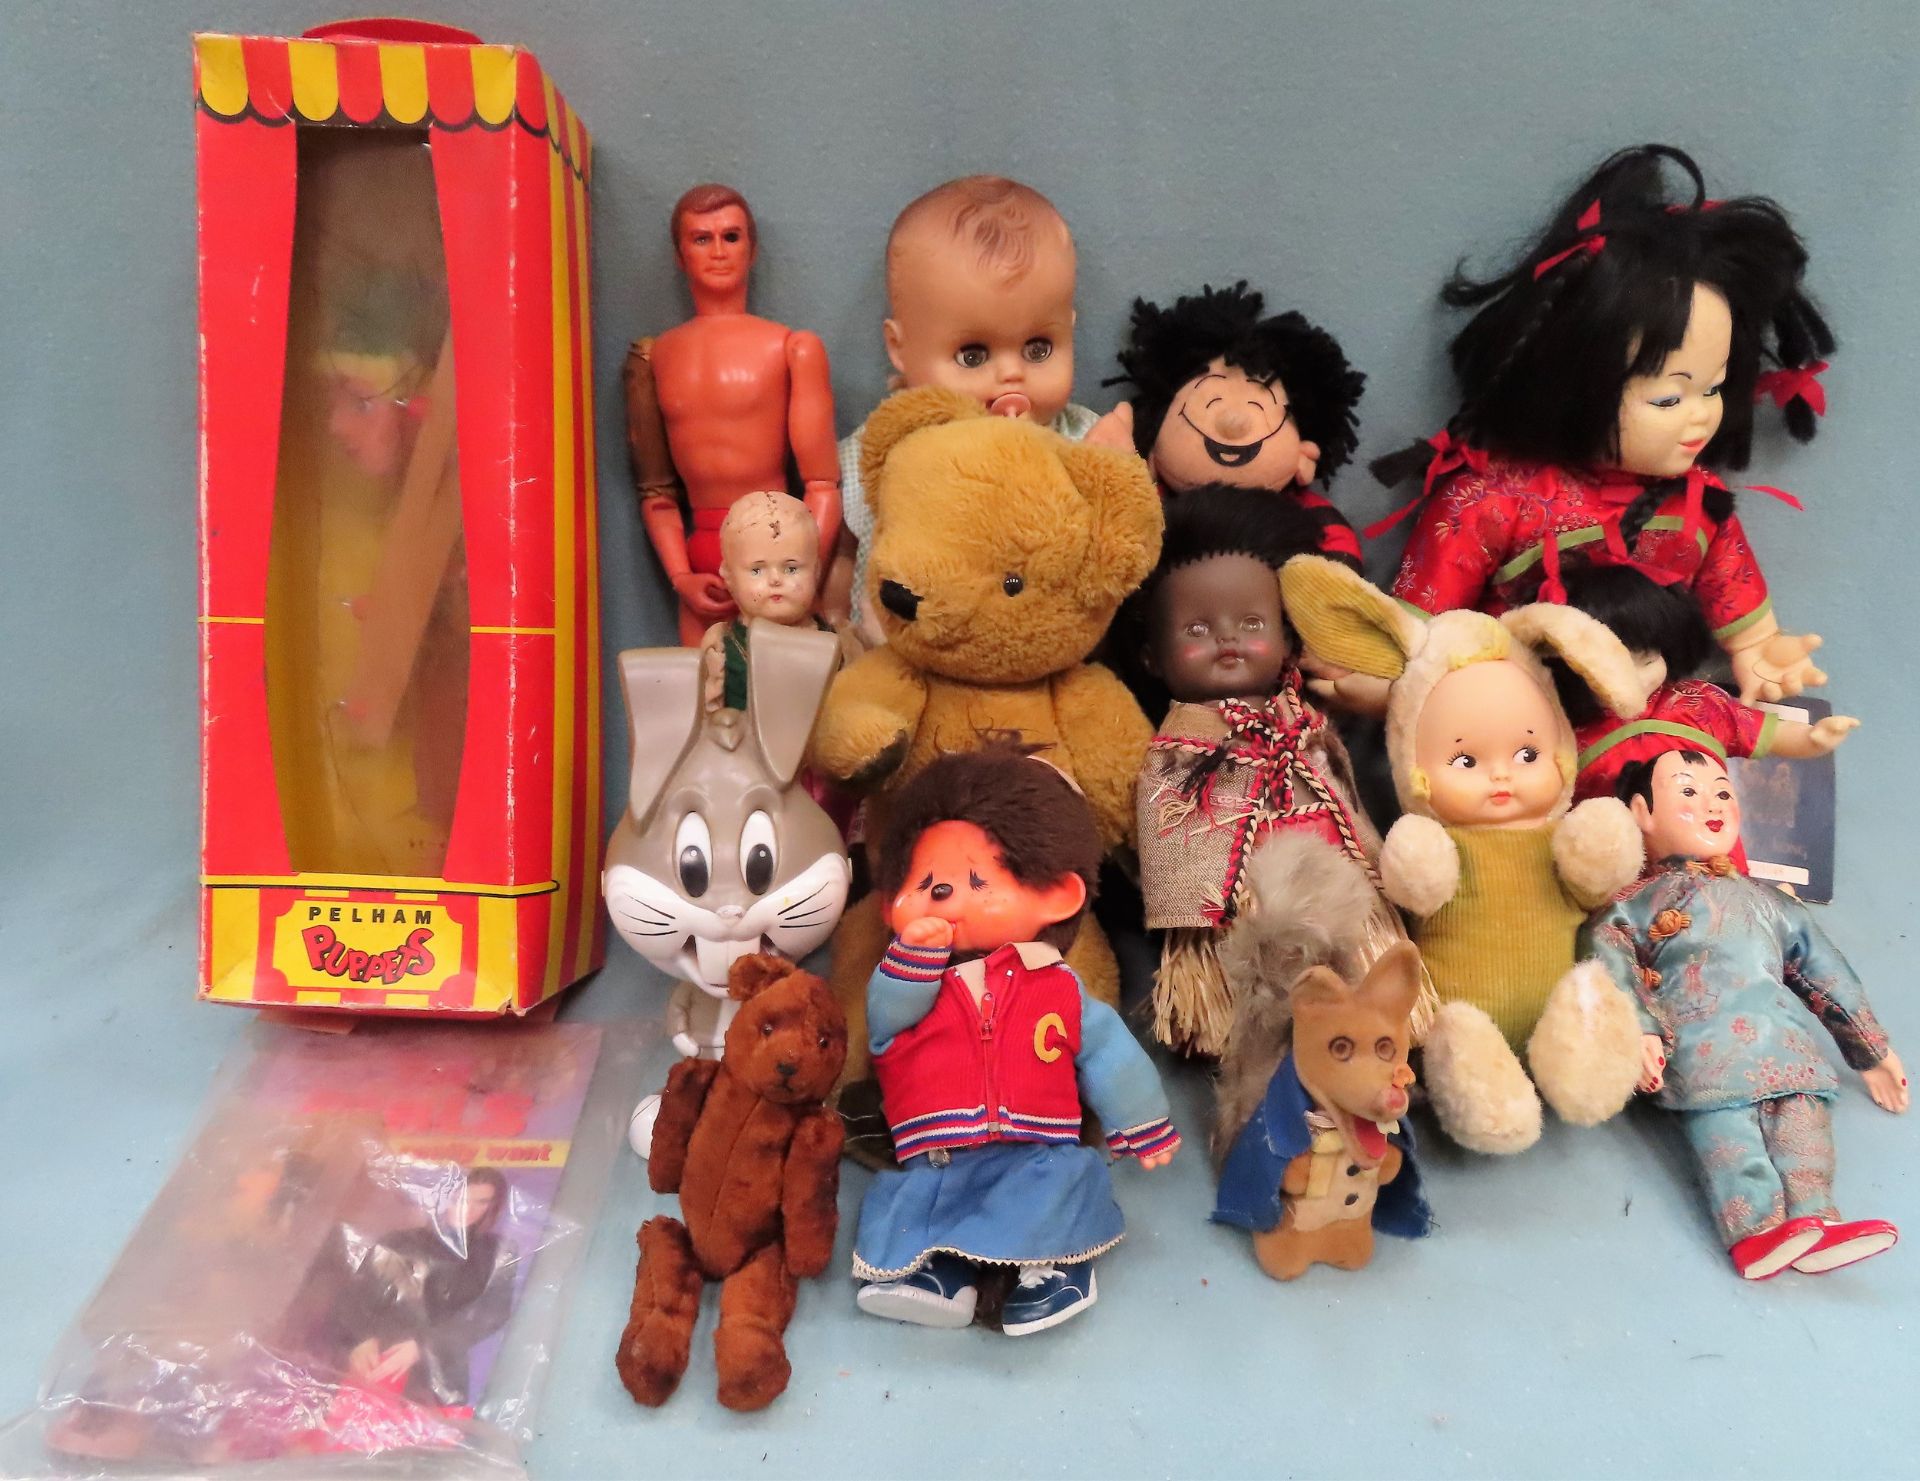 Parcel of various dolls and teddies including boxed Pelham Puppet, Basil Brush, Dennis the Menace,